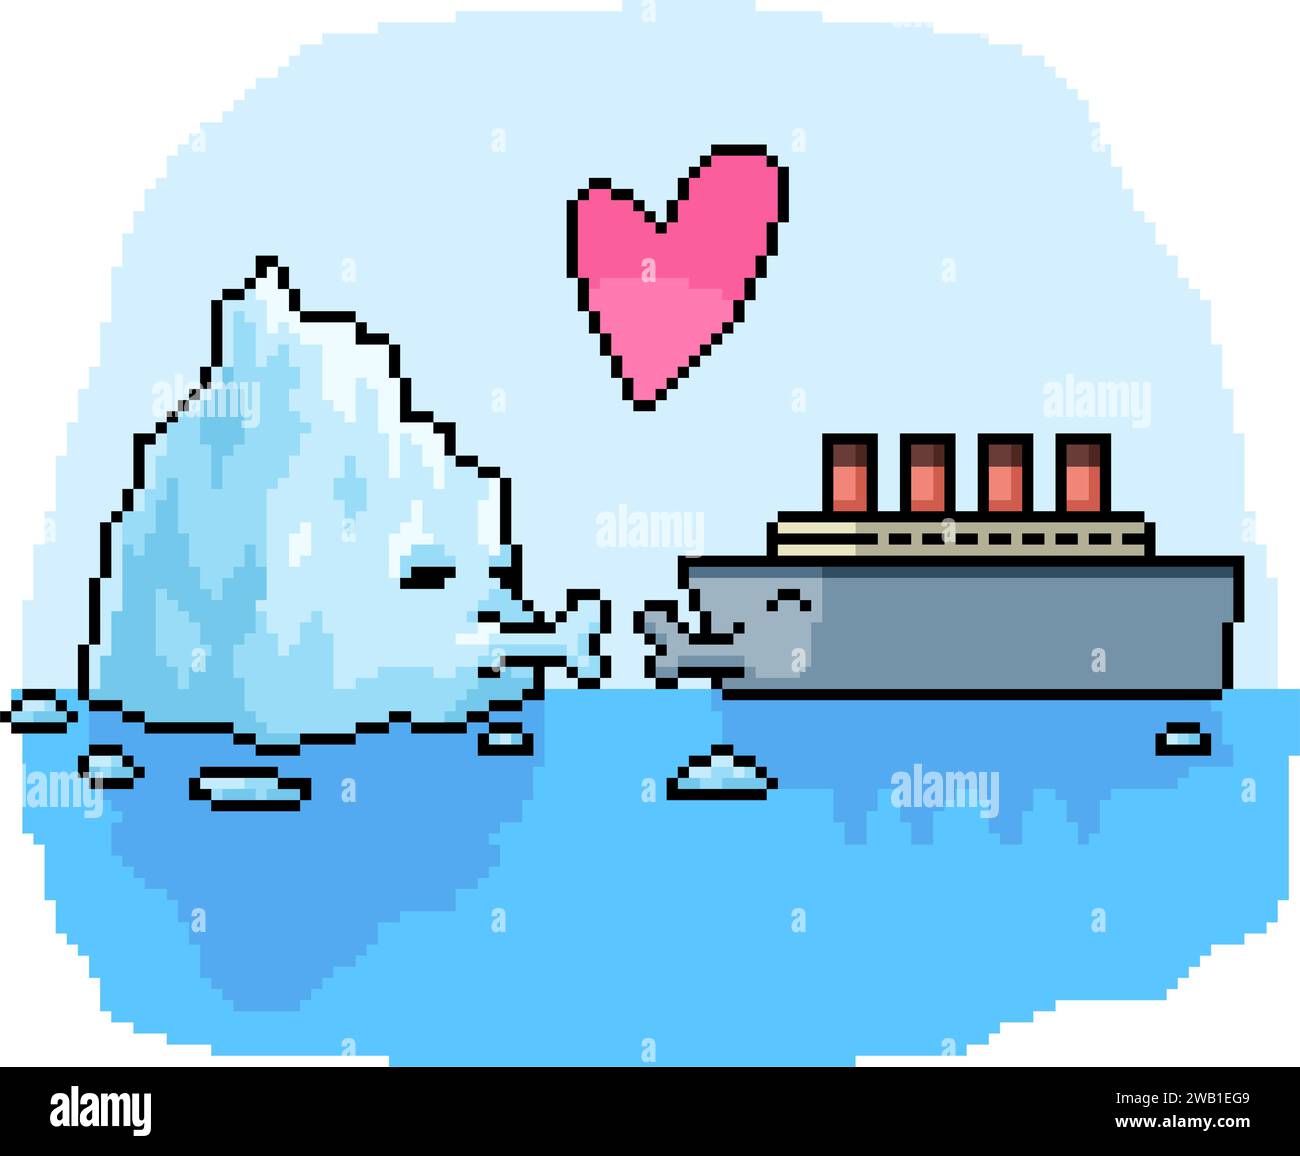 Pixelkunst des Eisberg-Schiffspaares Stock Vektor